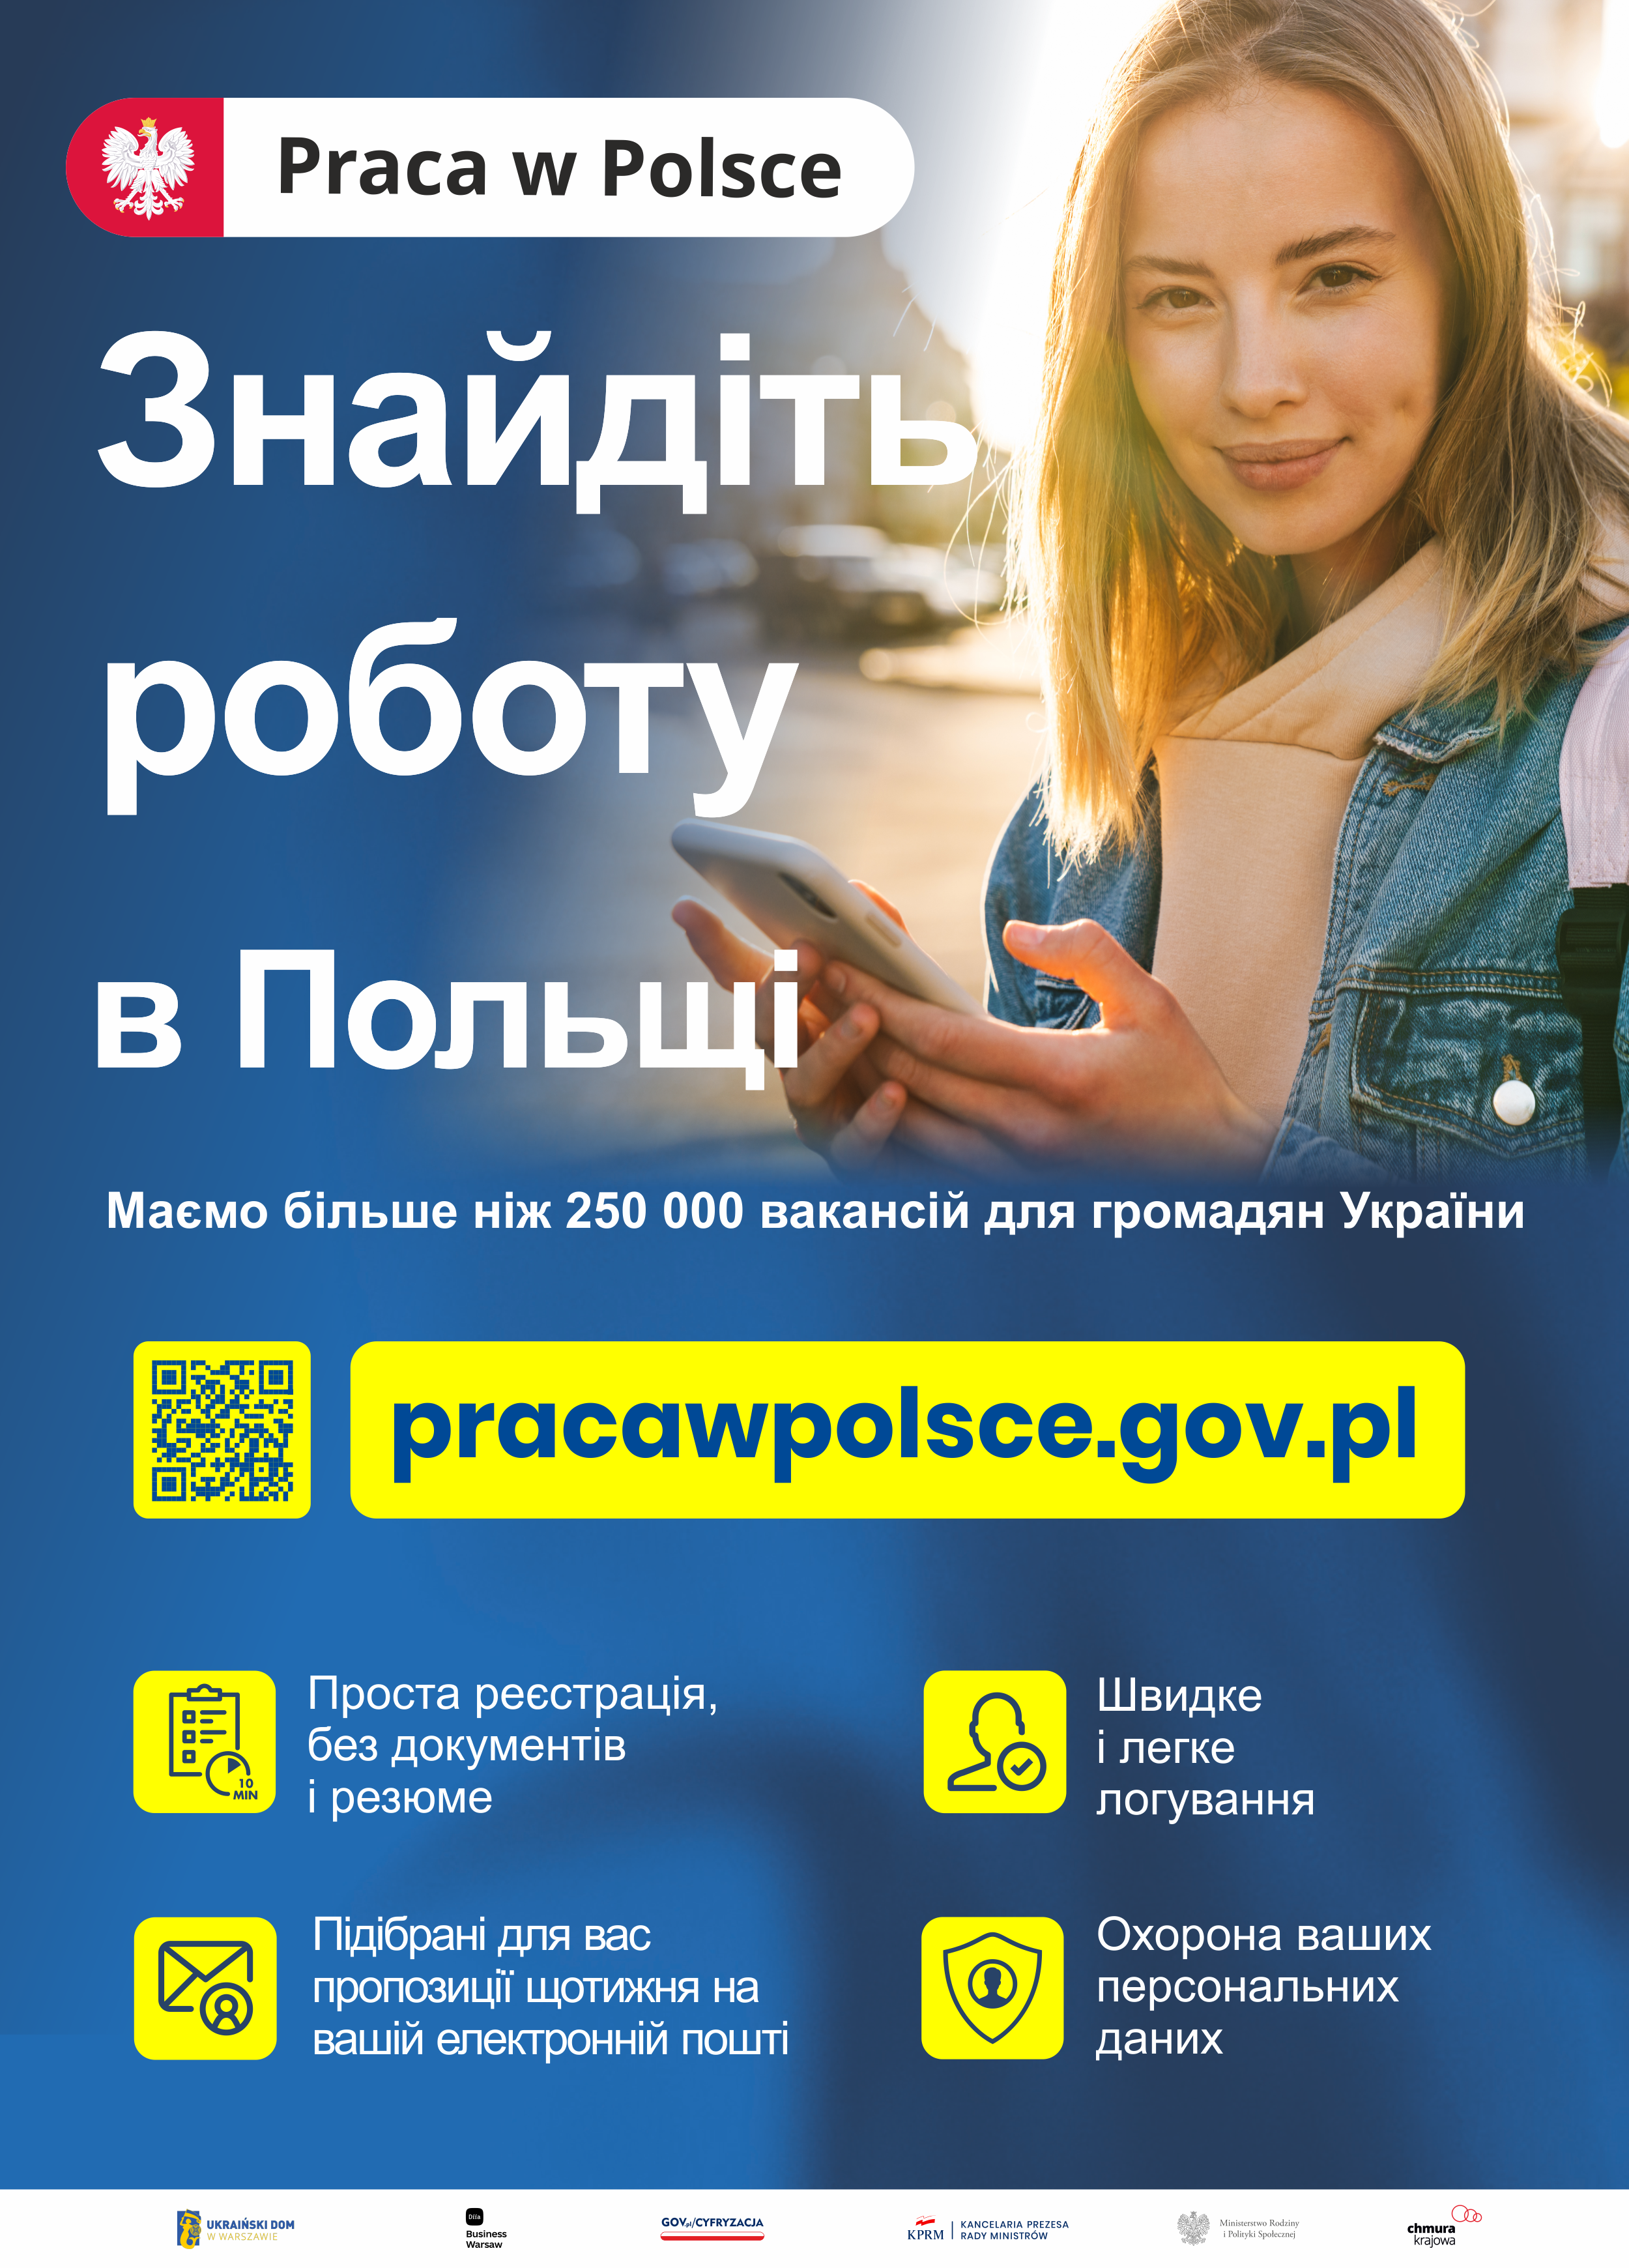 plakat portalu pracawpolsce.gov.pl